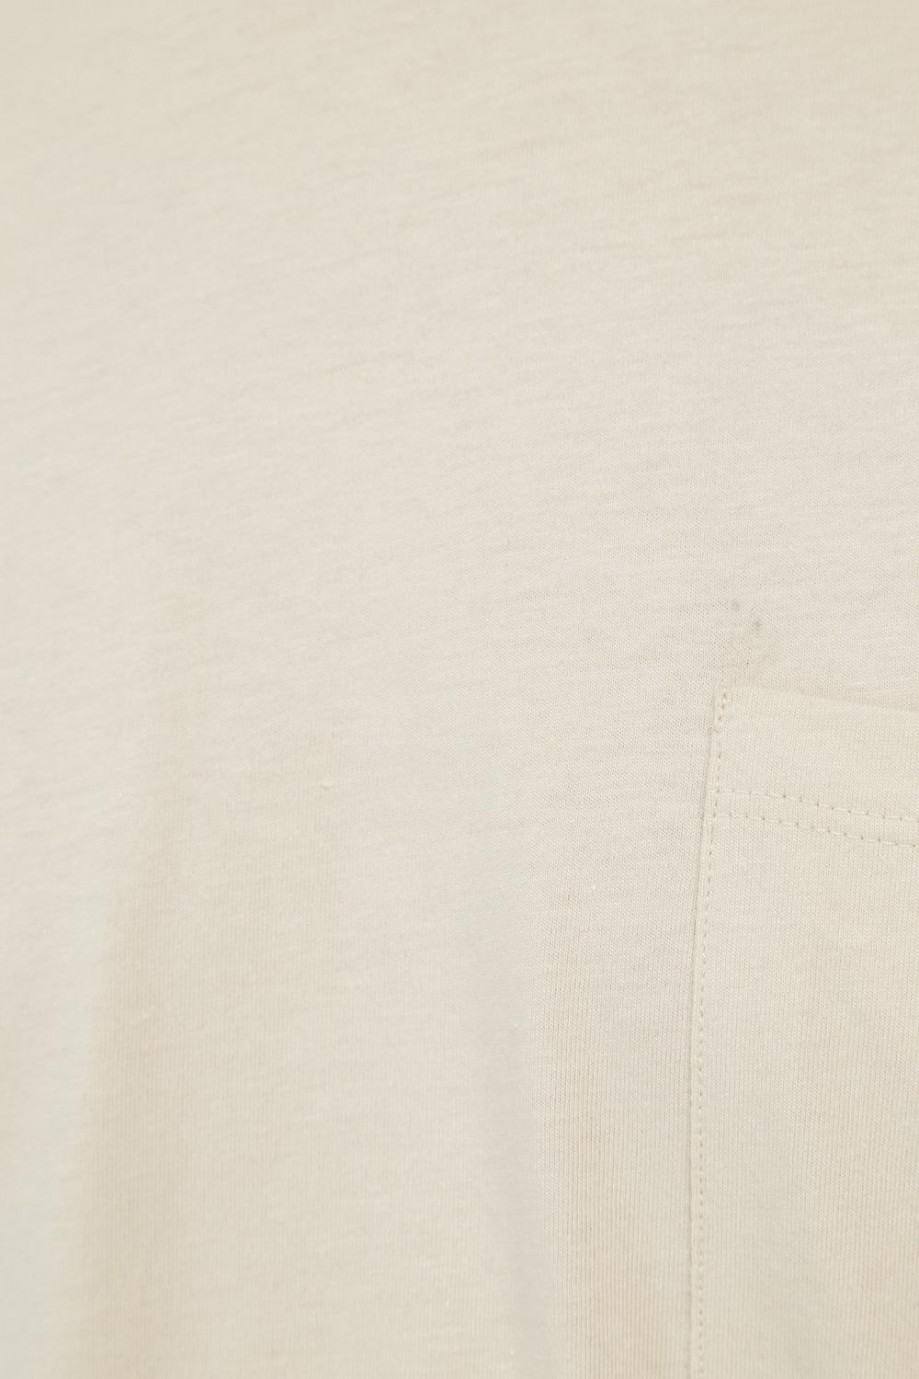 Camiseta unicolor manga corta con bolsillo de parche en frente